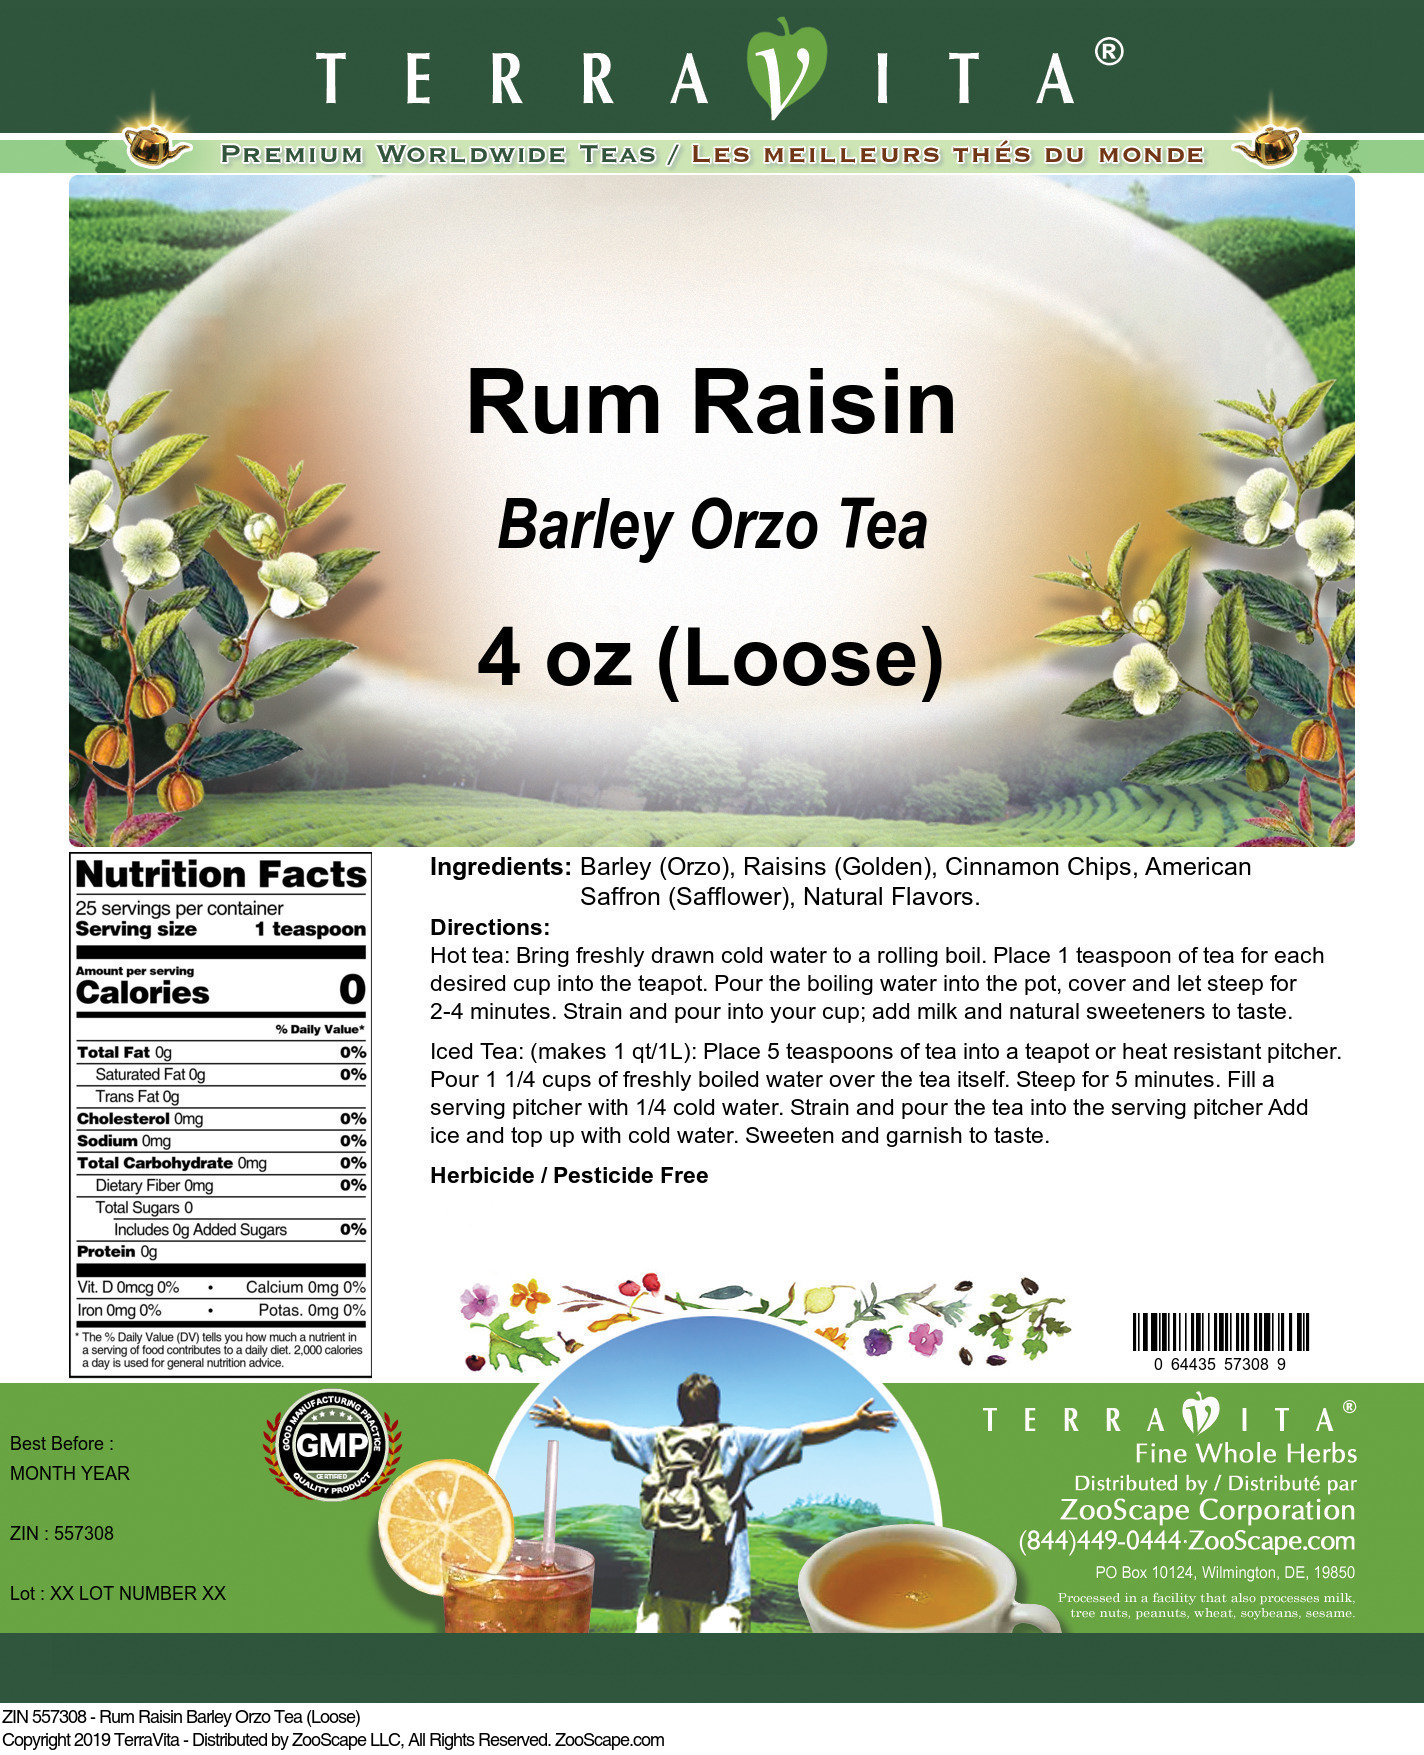 Rum Raisin Barley Orzo Tea (Loose) - Label